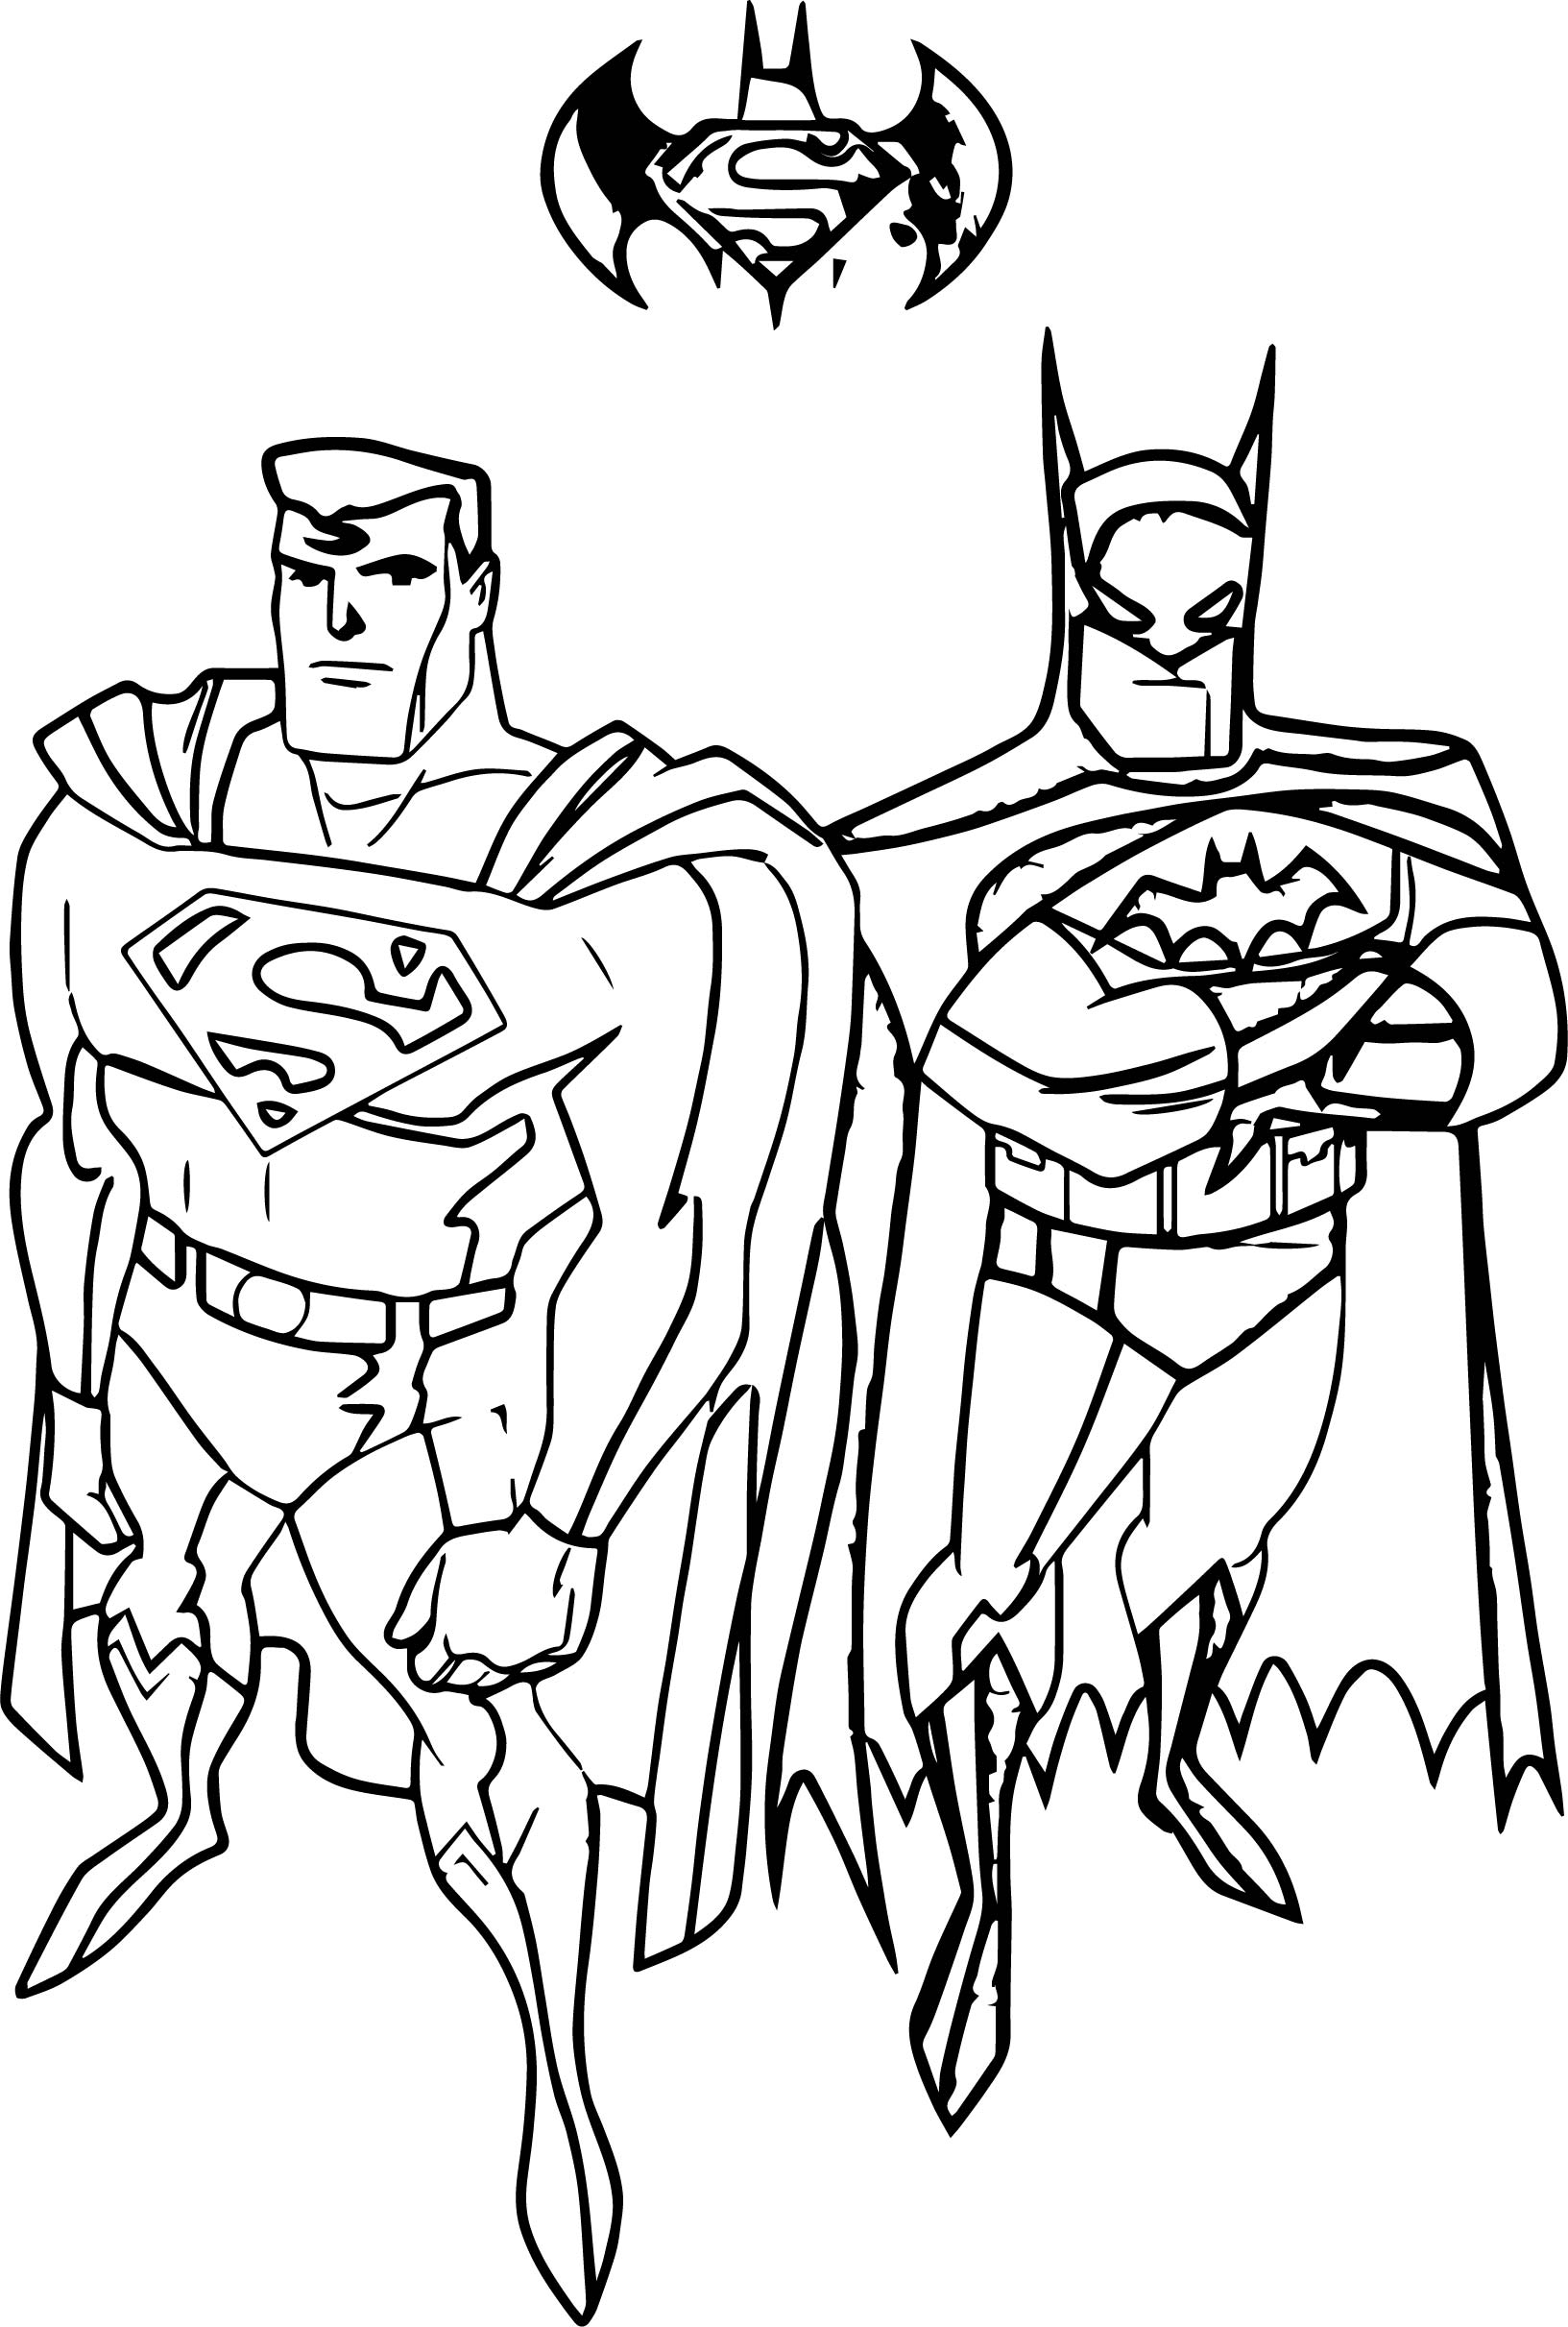 Batman Vs Superman Coloring Pages at GetColorings.com ...